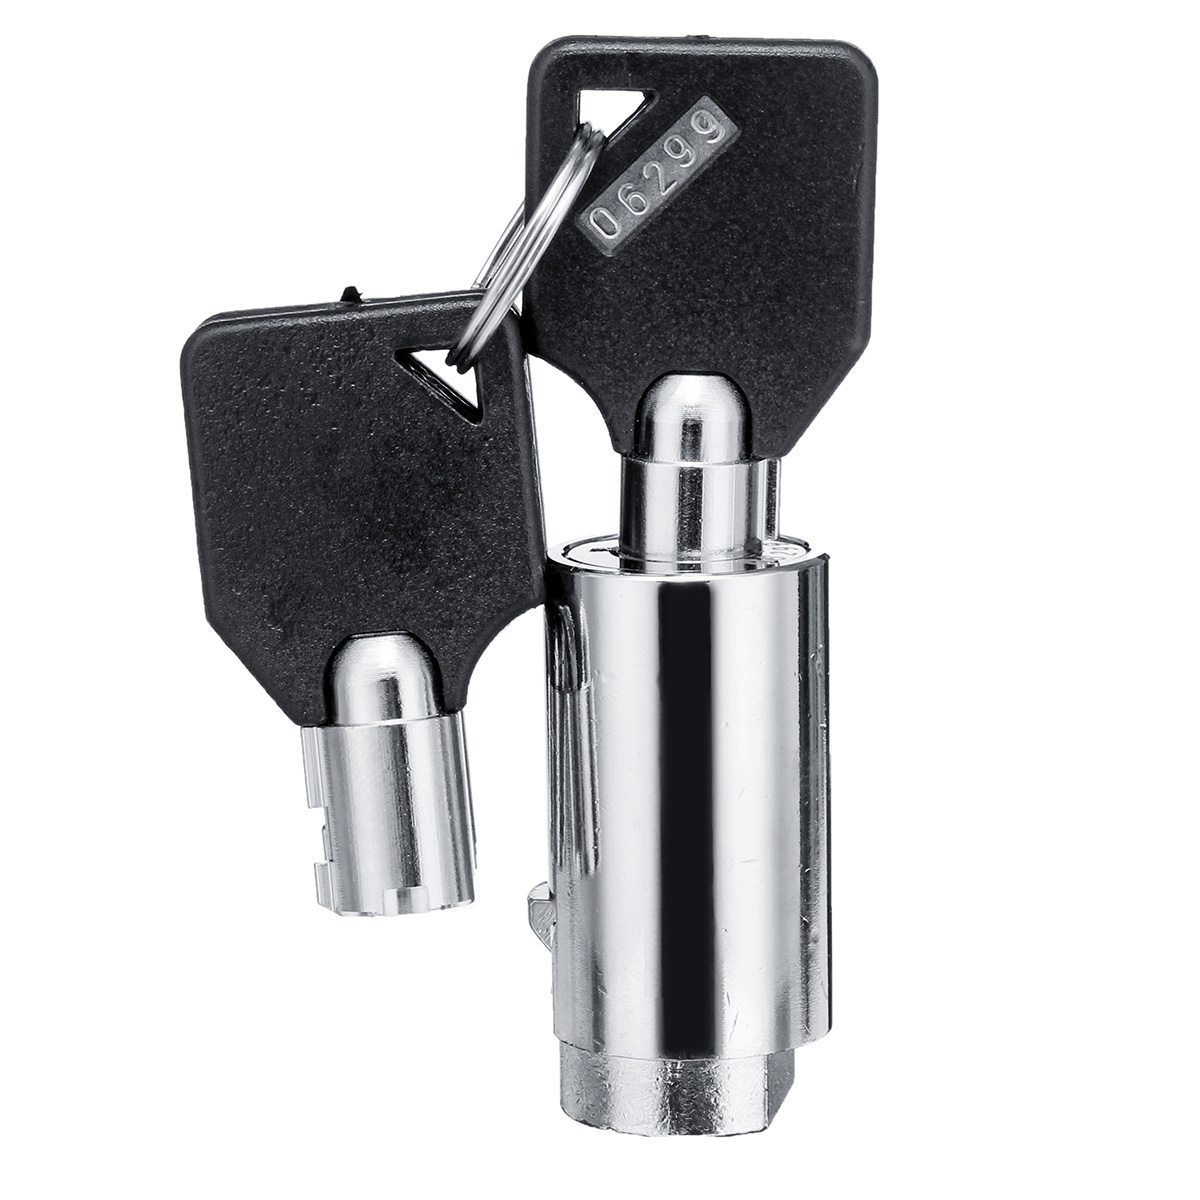 T-Type-Vending-Machine-Plug-Cabinet-Lock-Cylinder-Narco-Vendo-National-Rowe-USI-1459545